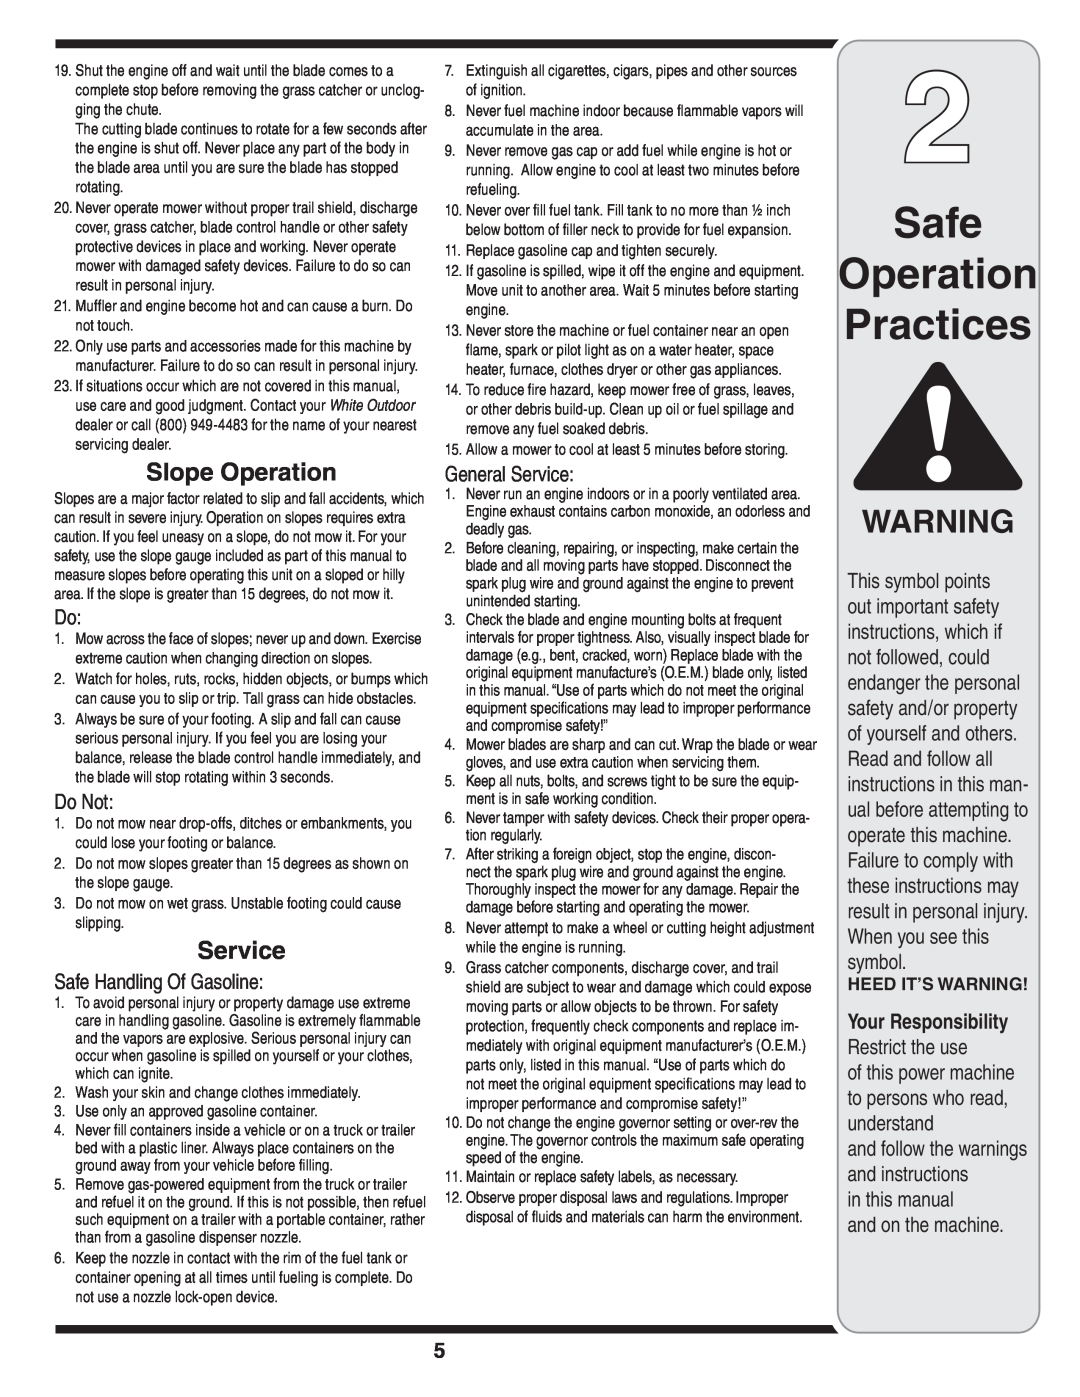 Tecumseh 105 warranty Safe Operation Practices, Slope Operation, Do Not, Safe Handling Of Gasoline, General Service 